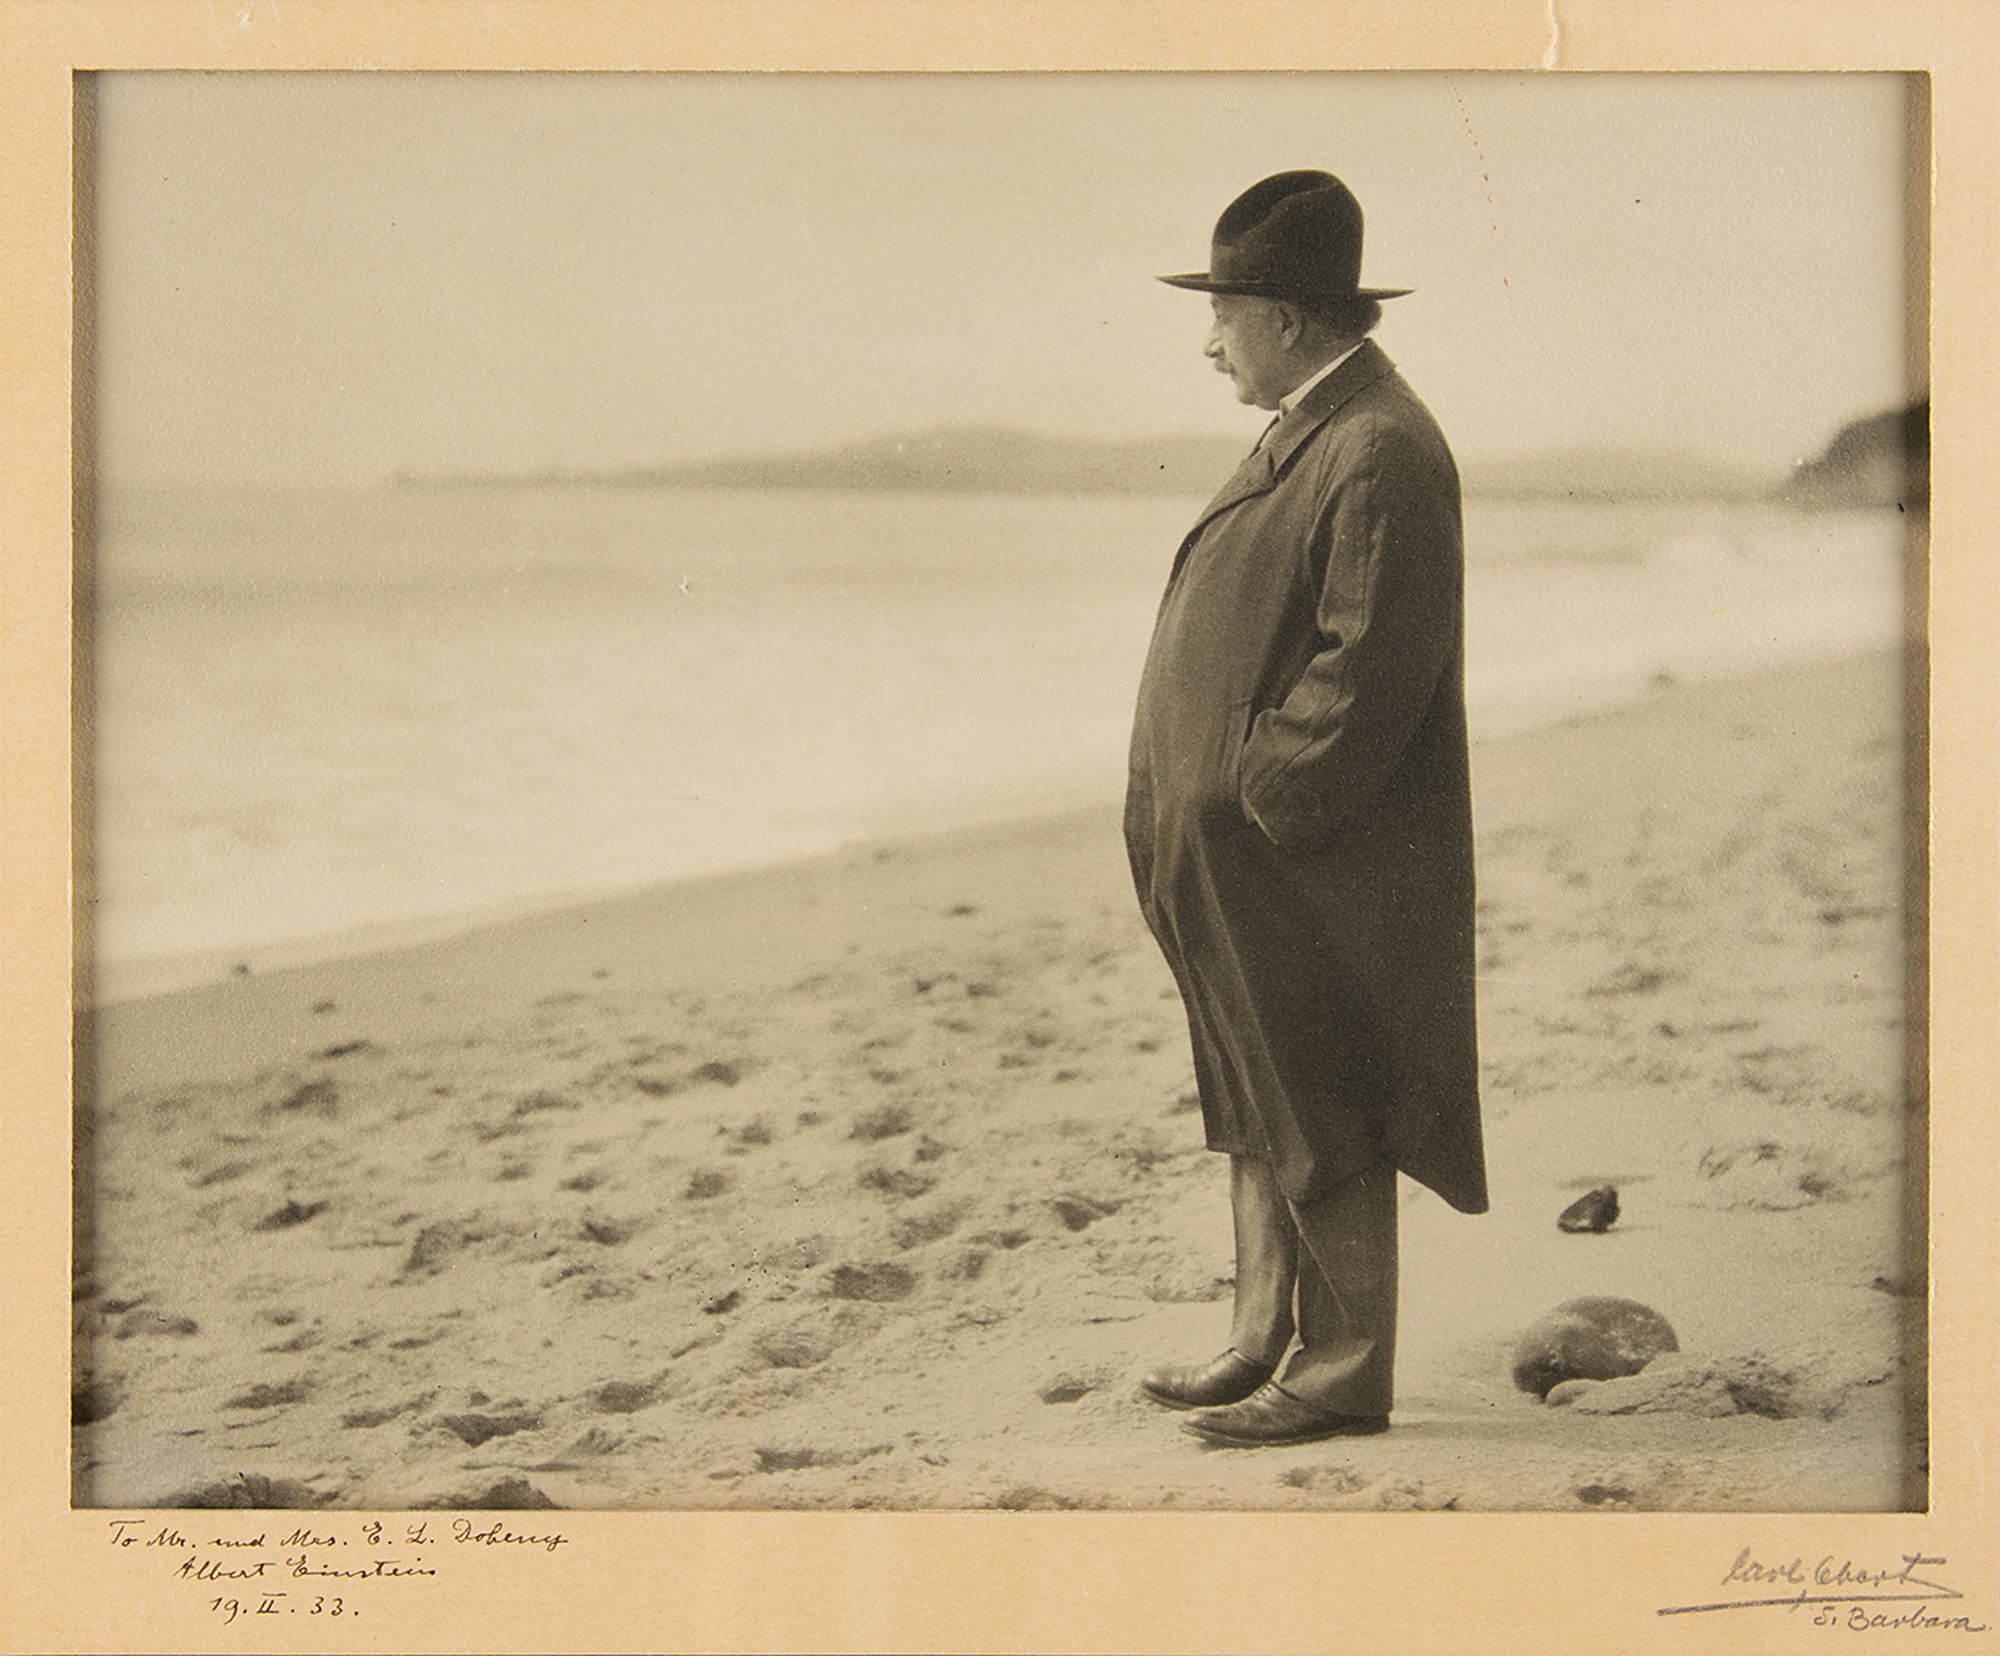 Lot #6048 Albert Einstein Signed Photograph on Santa Barbara Beach (1933) - Image 1